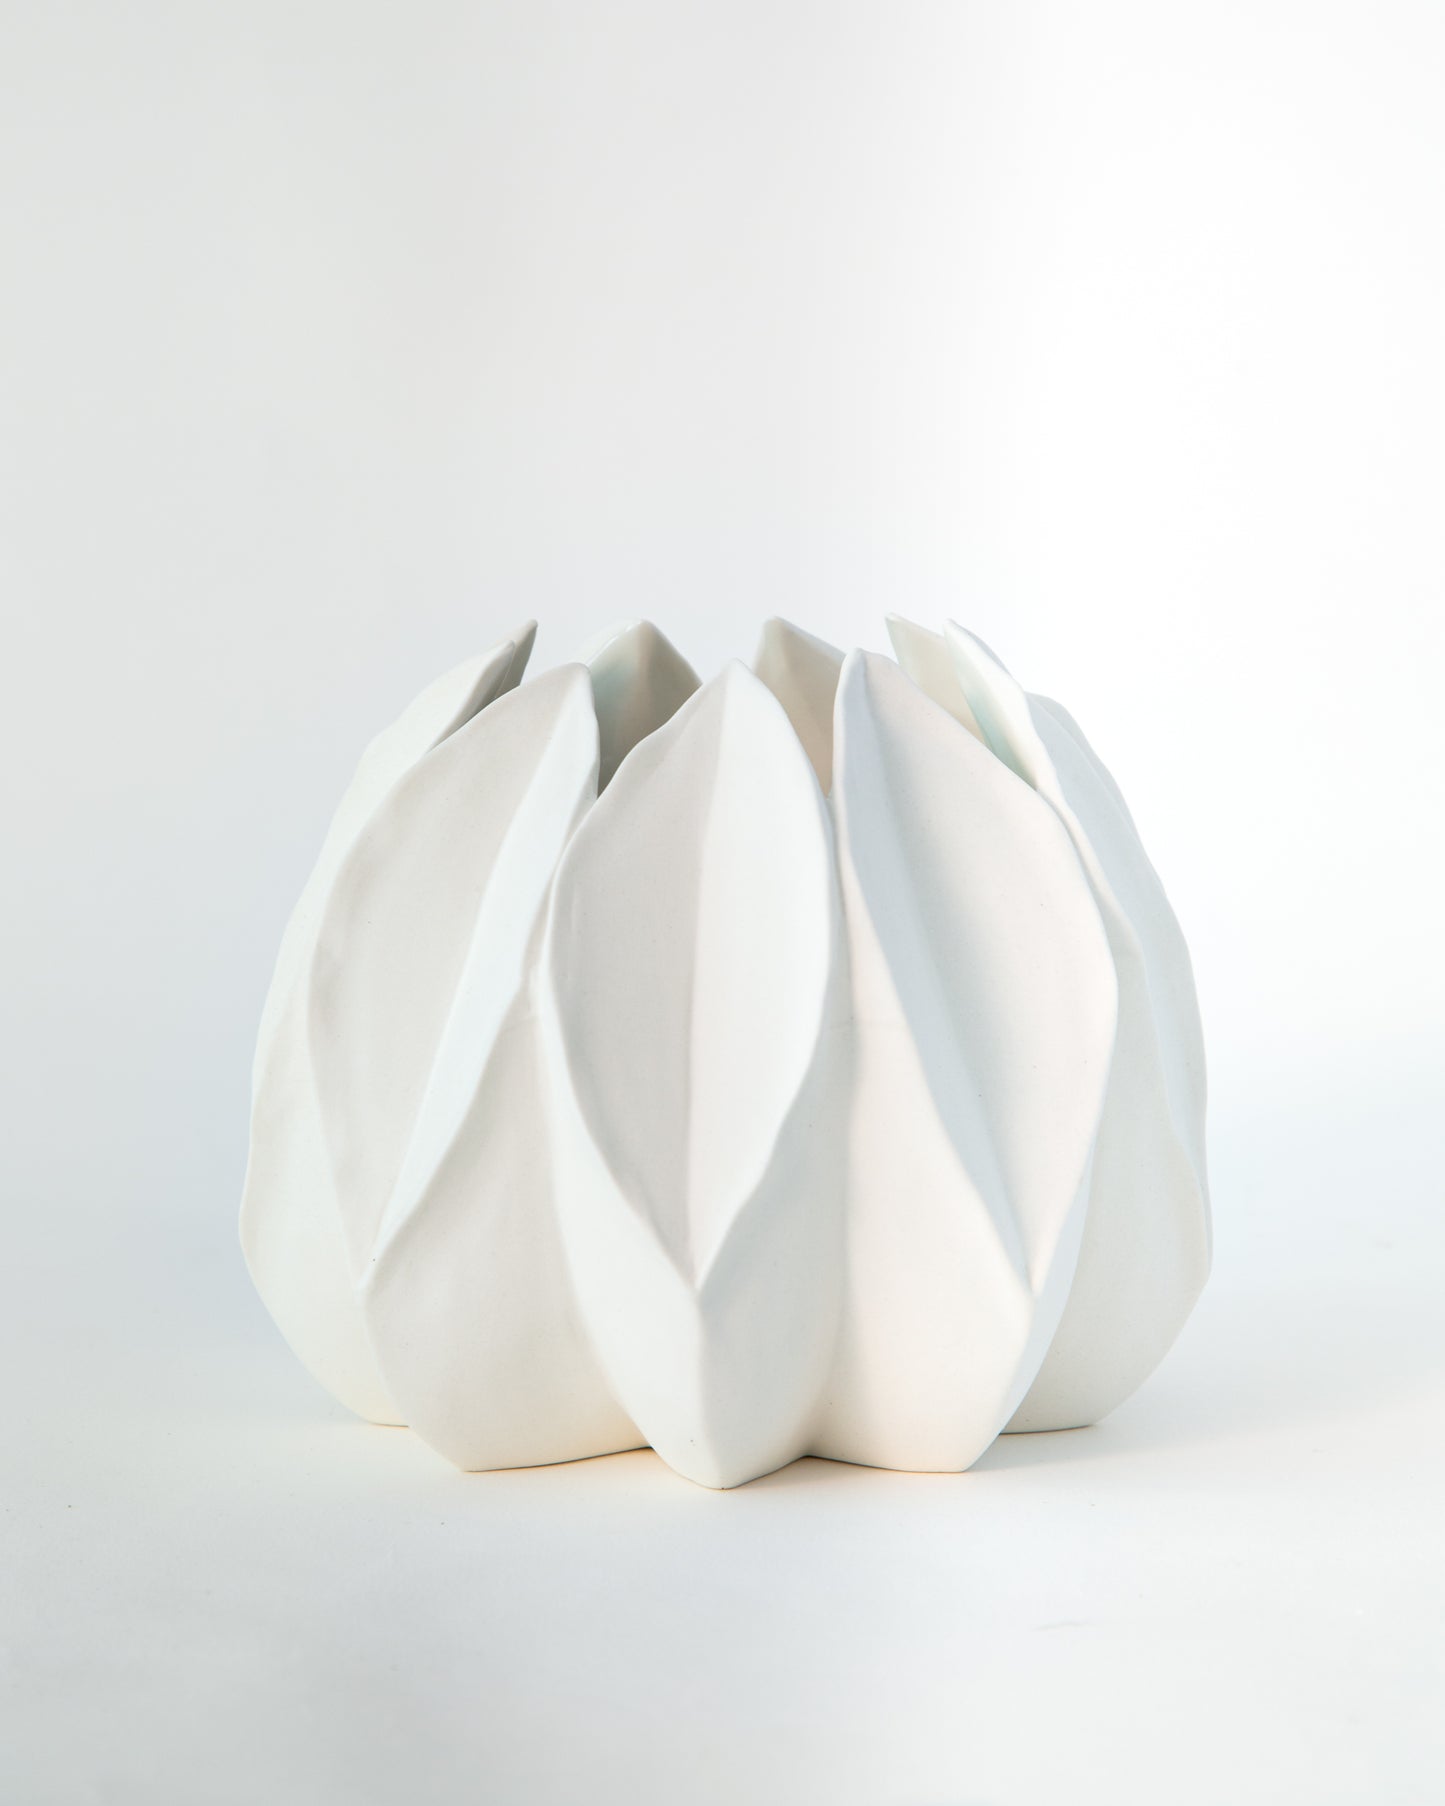 ARIA vase,D16cm, H13cm, biscuit porcelain